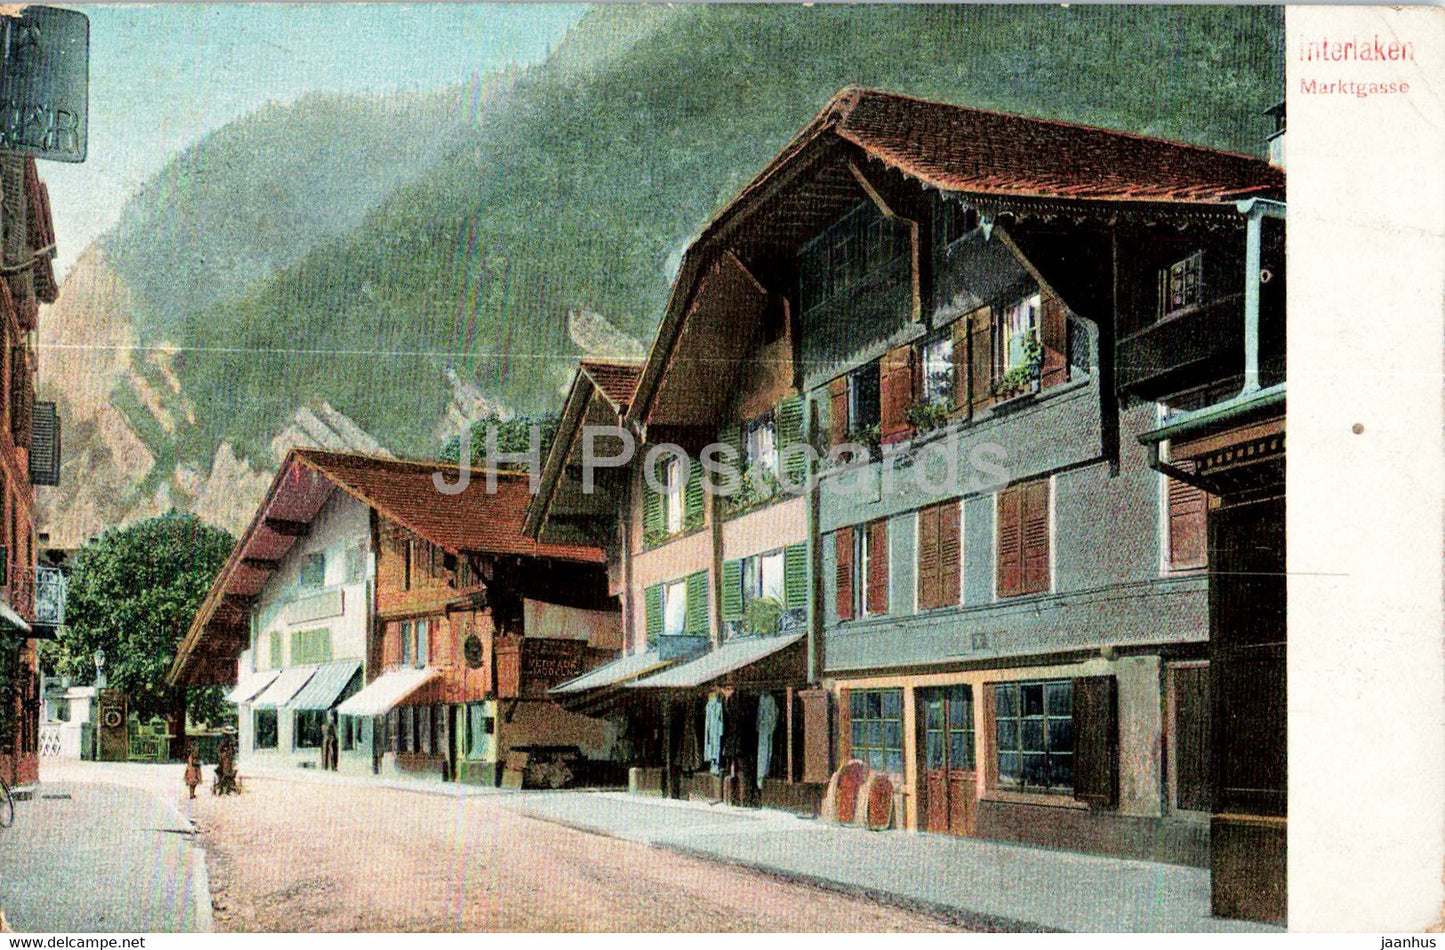 Interlaken - Marktgasse - old postcard - 1905 - Switzerland - used - JH Postcards